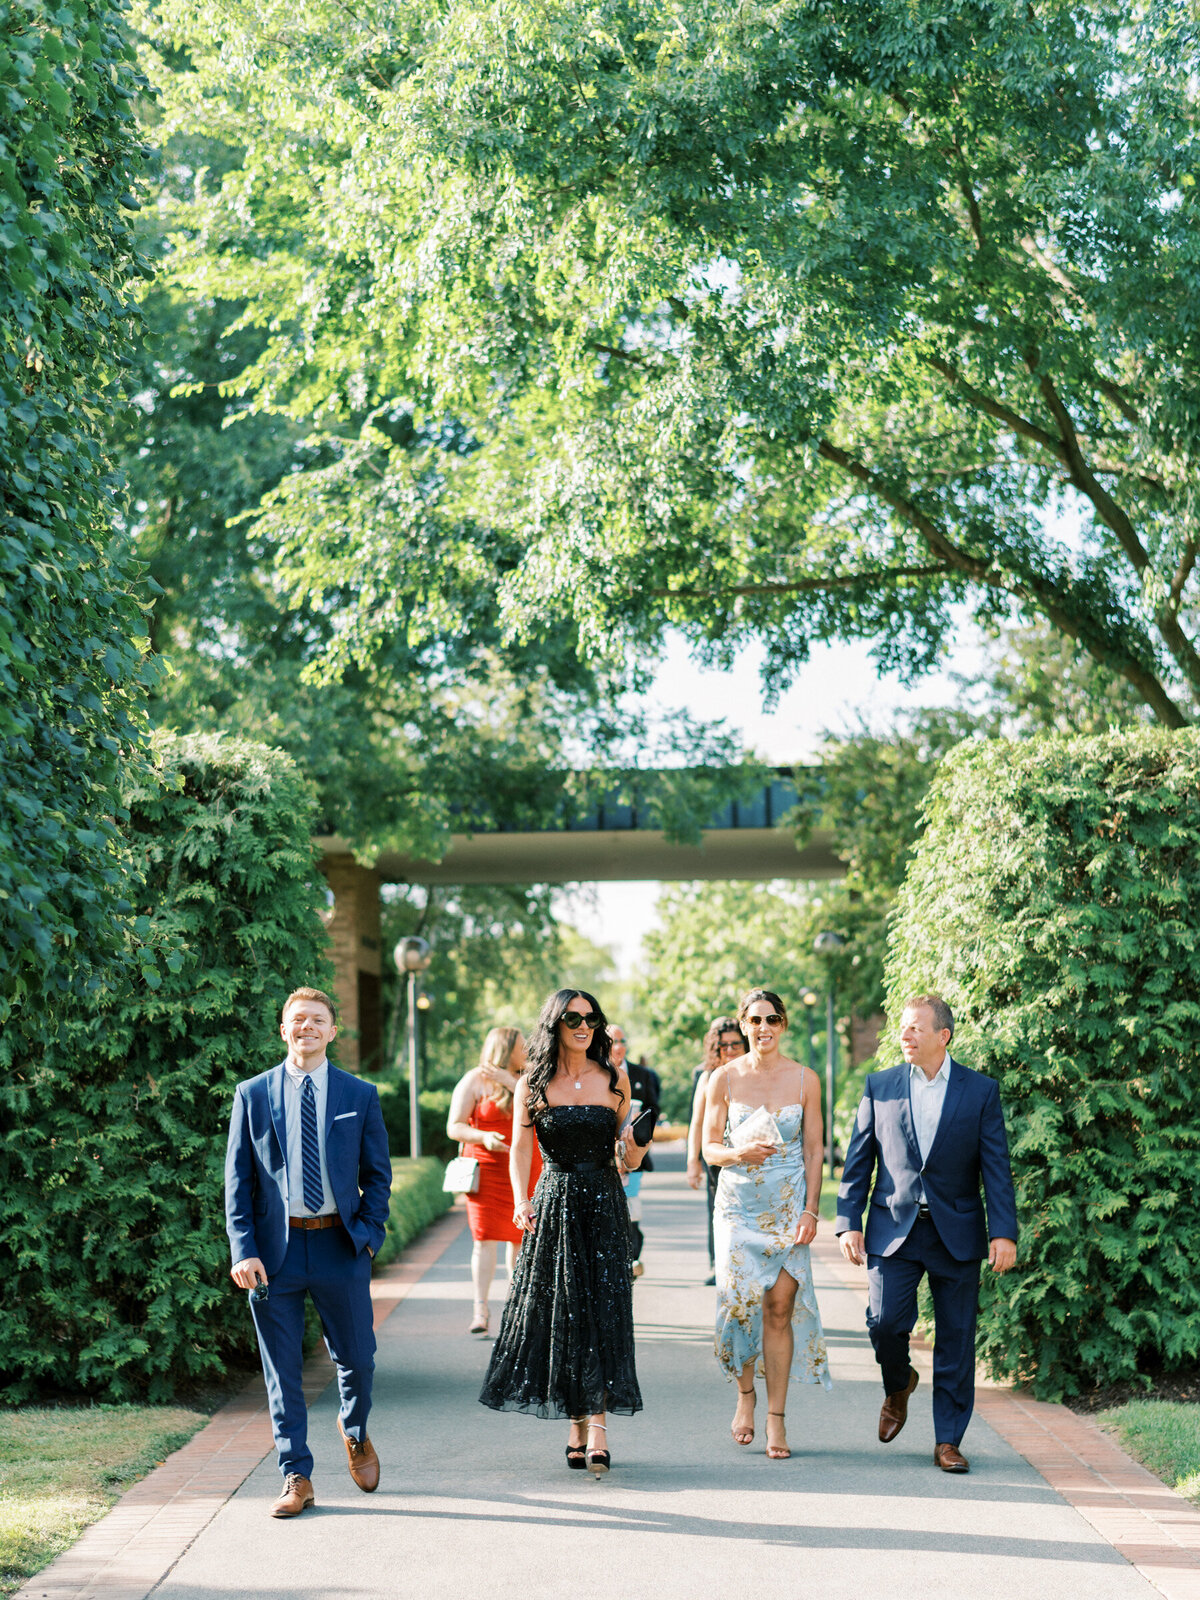 Summer Chicago Botanic Gardens Wedding Highlights | Amarachi Ikeji Photography 91